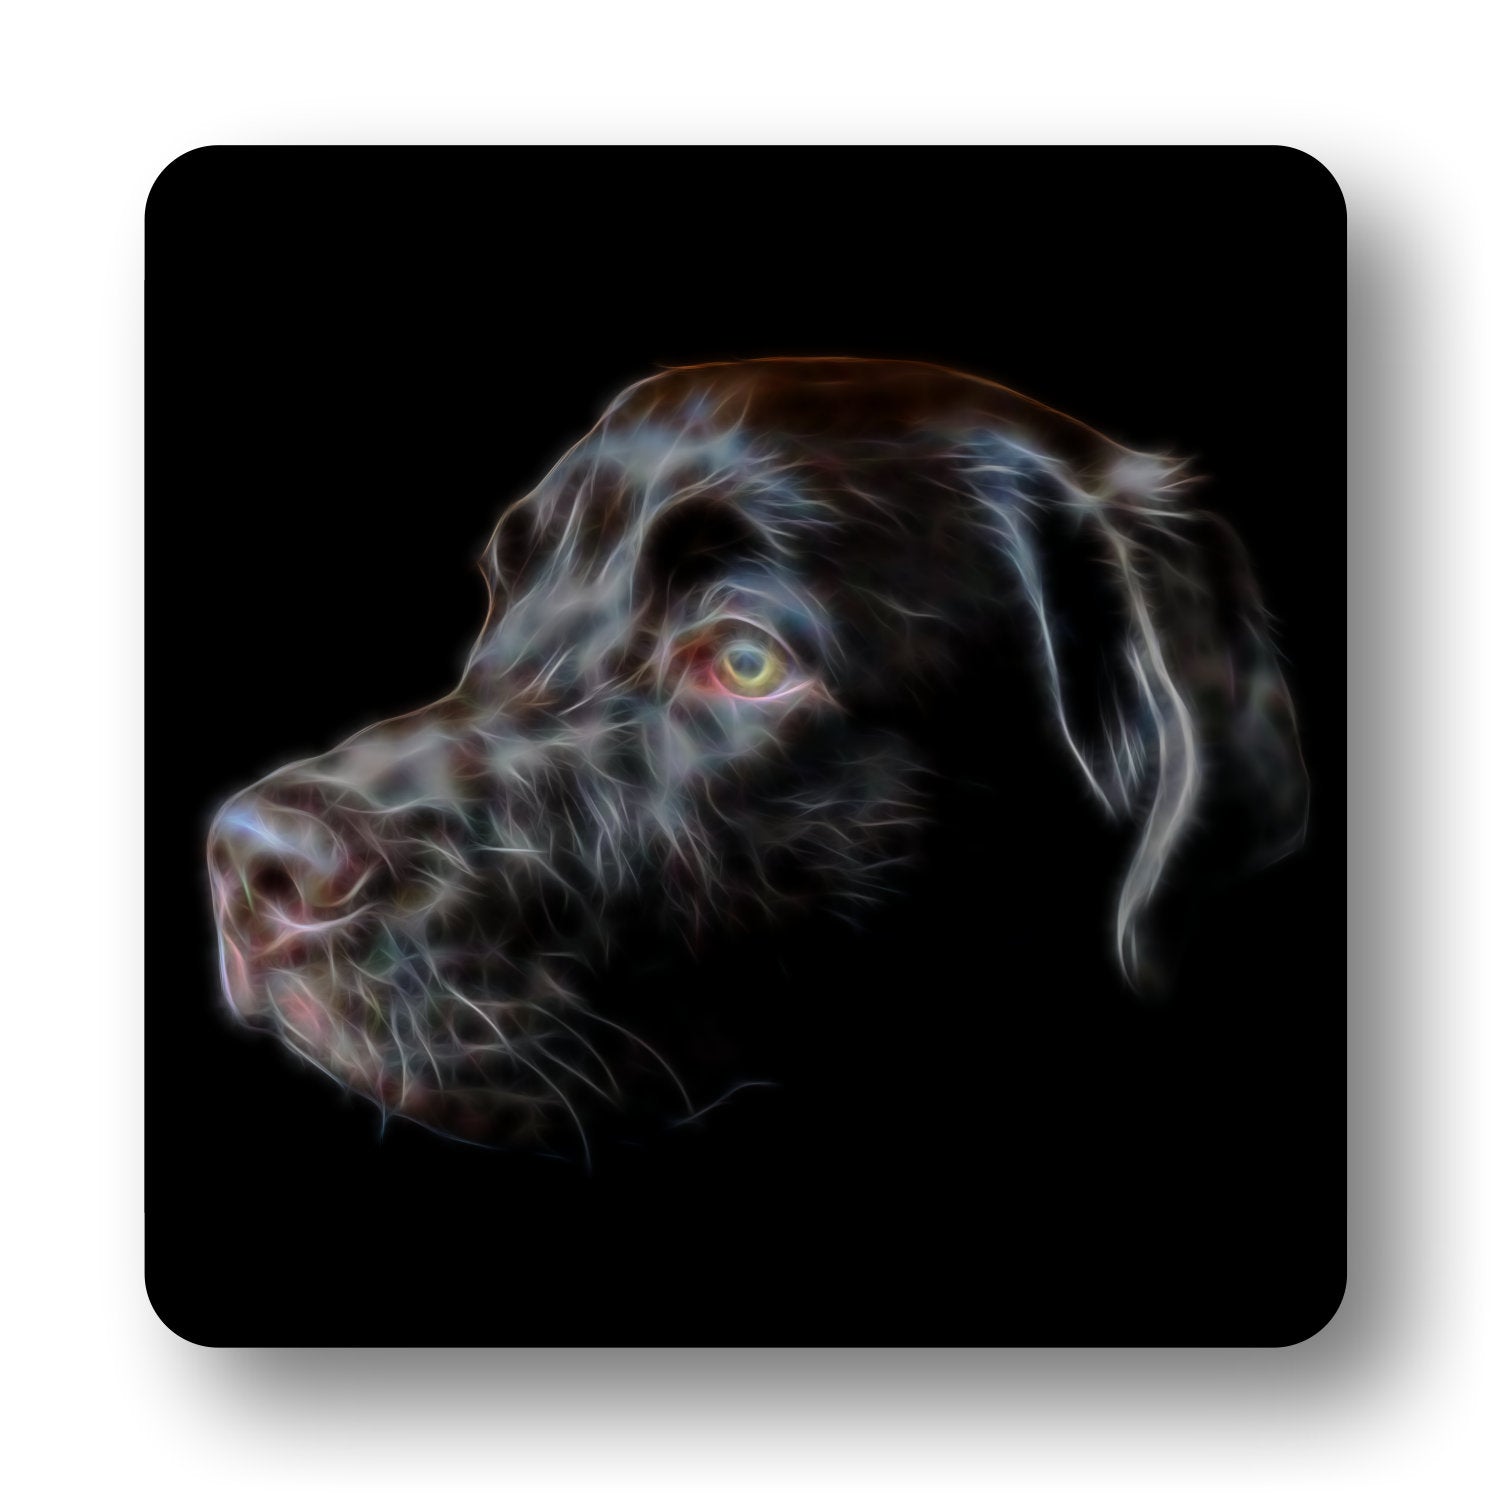 Chocolate Labrador Coasters, Set of 2, with Stunning Fractal Art Design, Dog Owner Gift